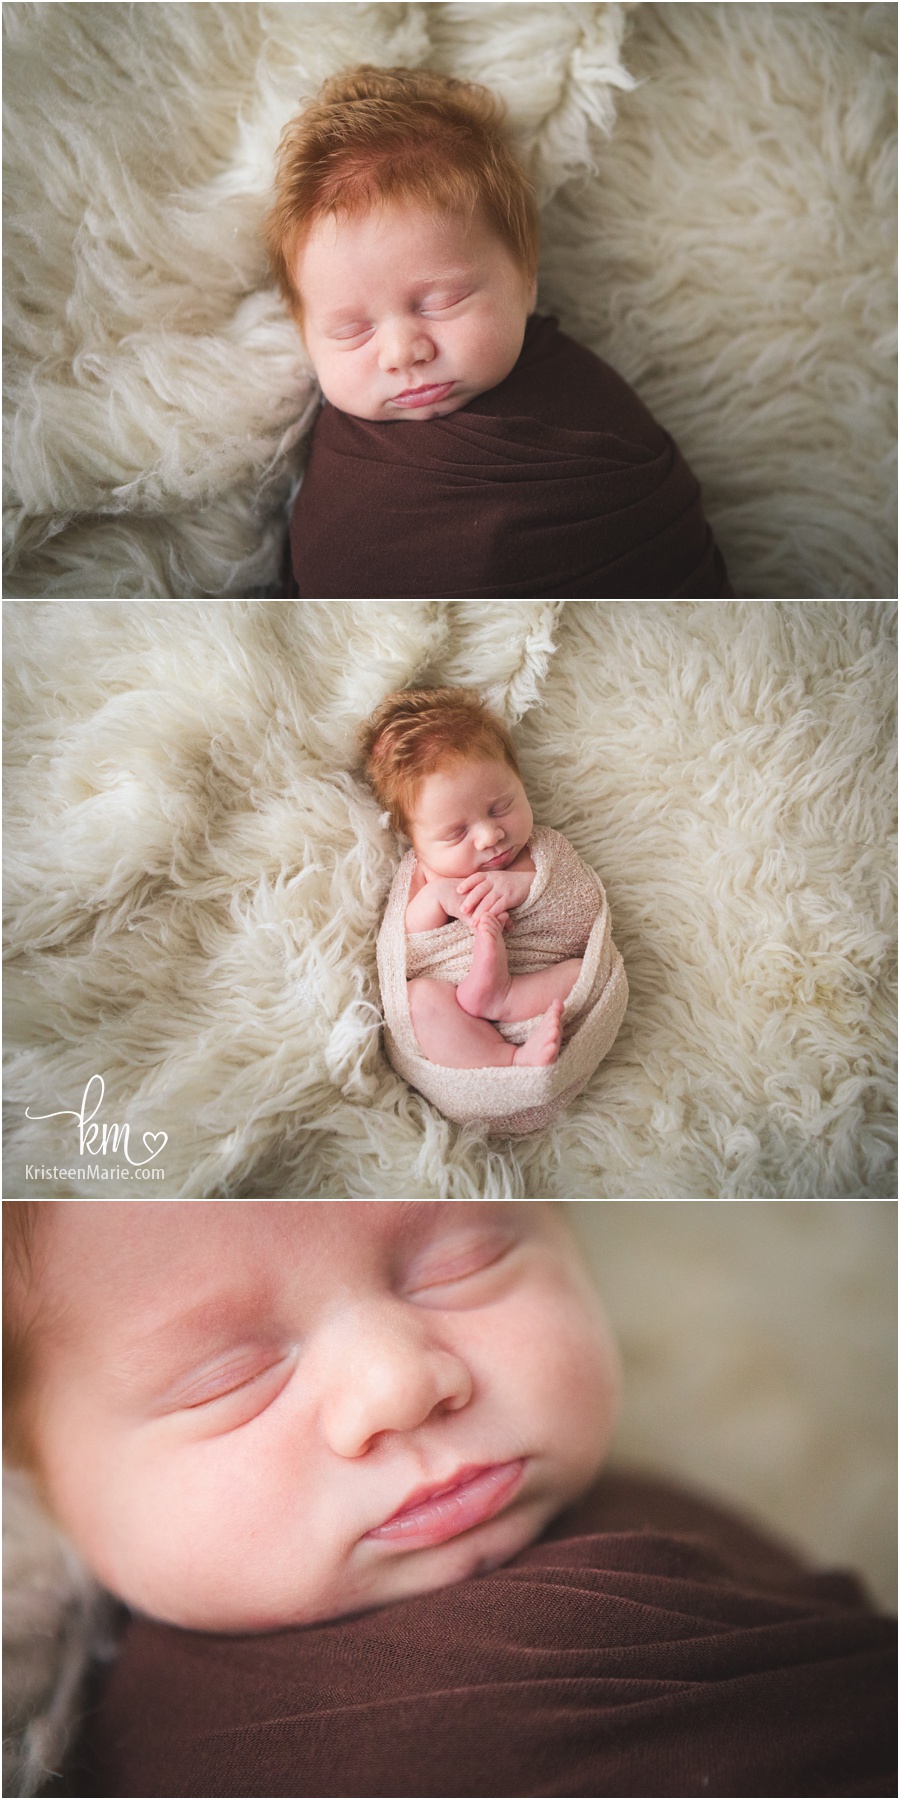 cream and brown - newborn photography - sleeping baby